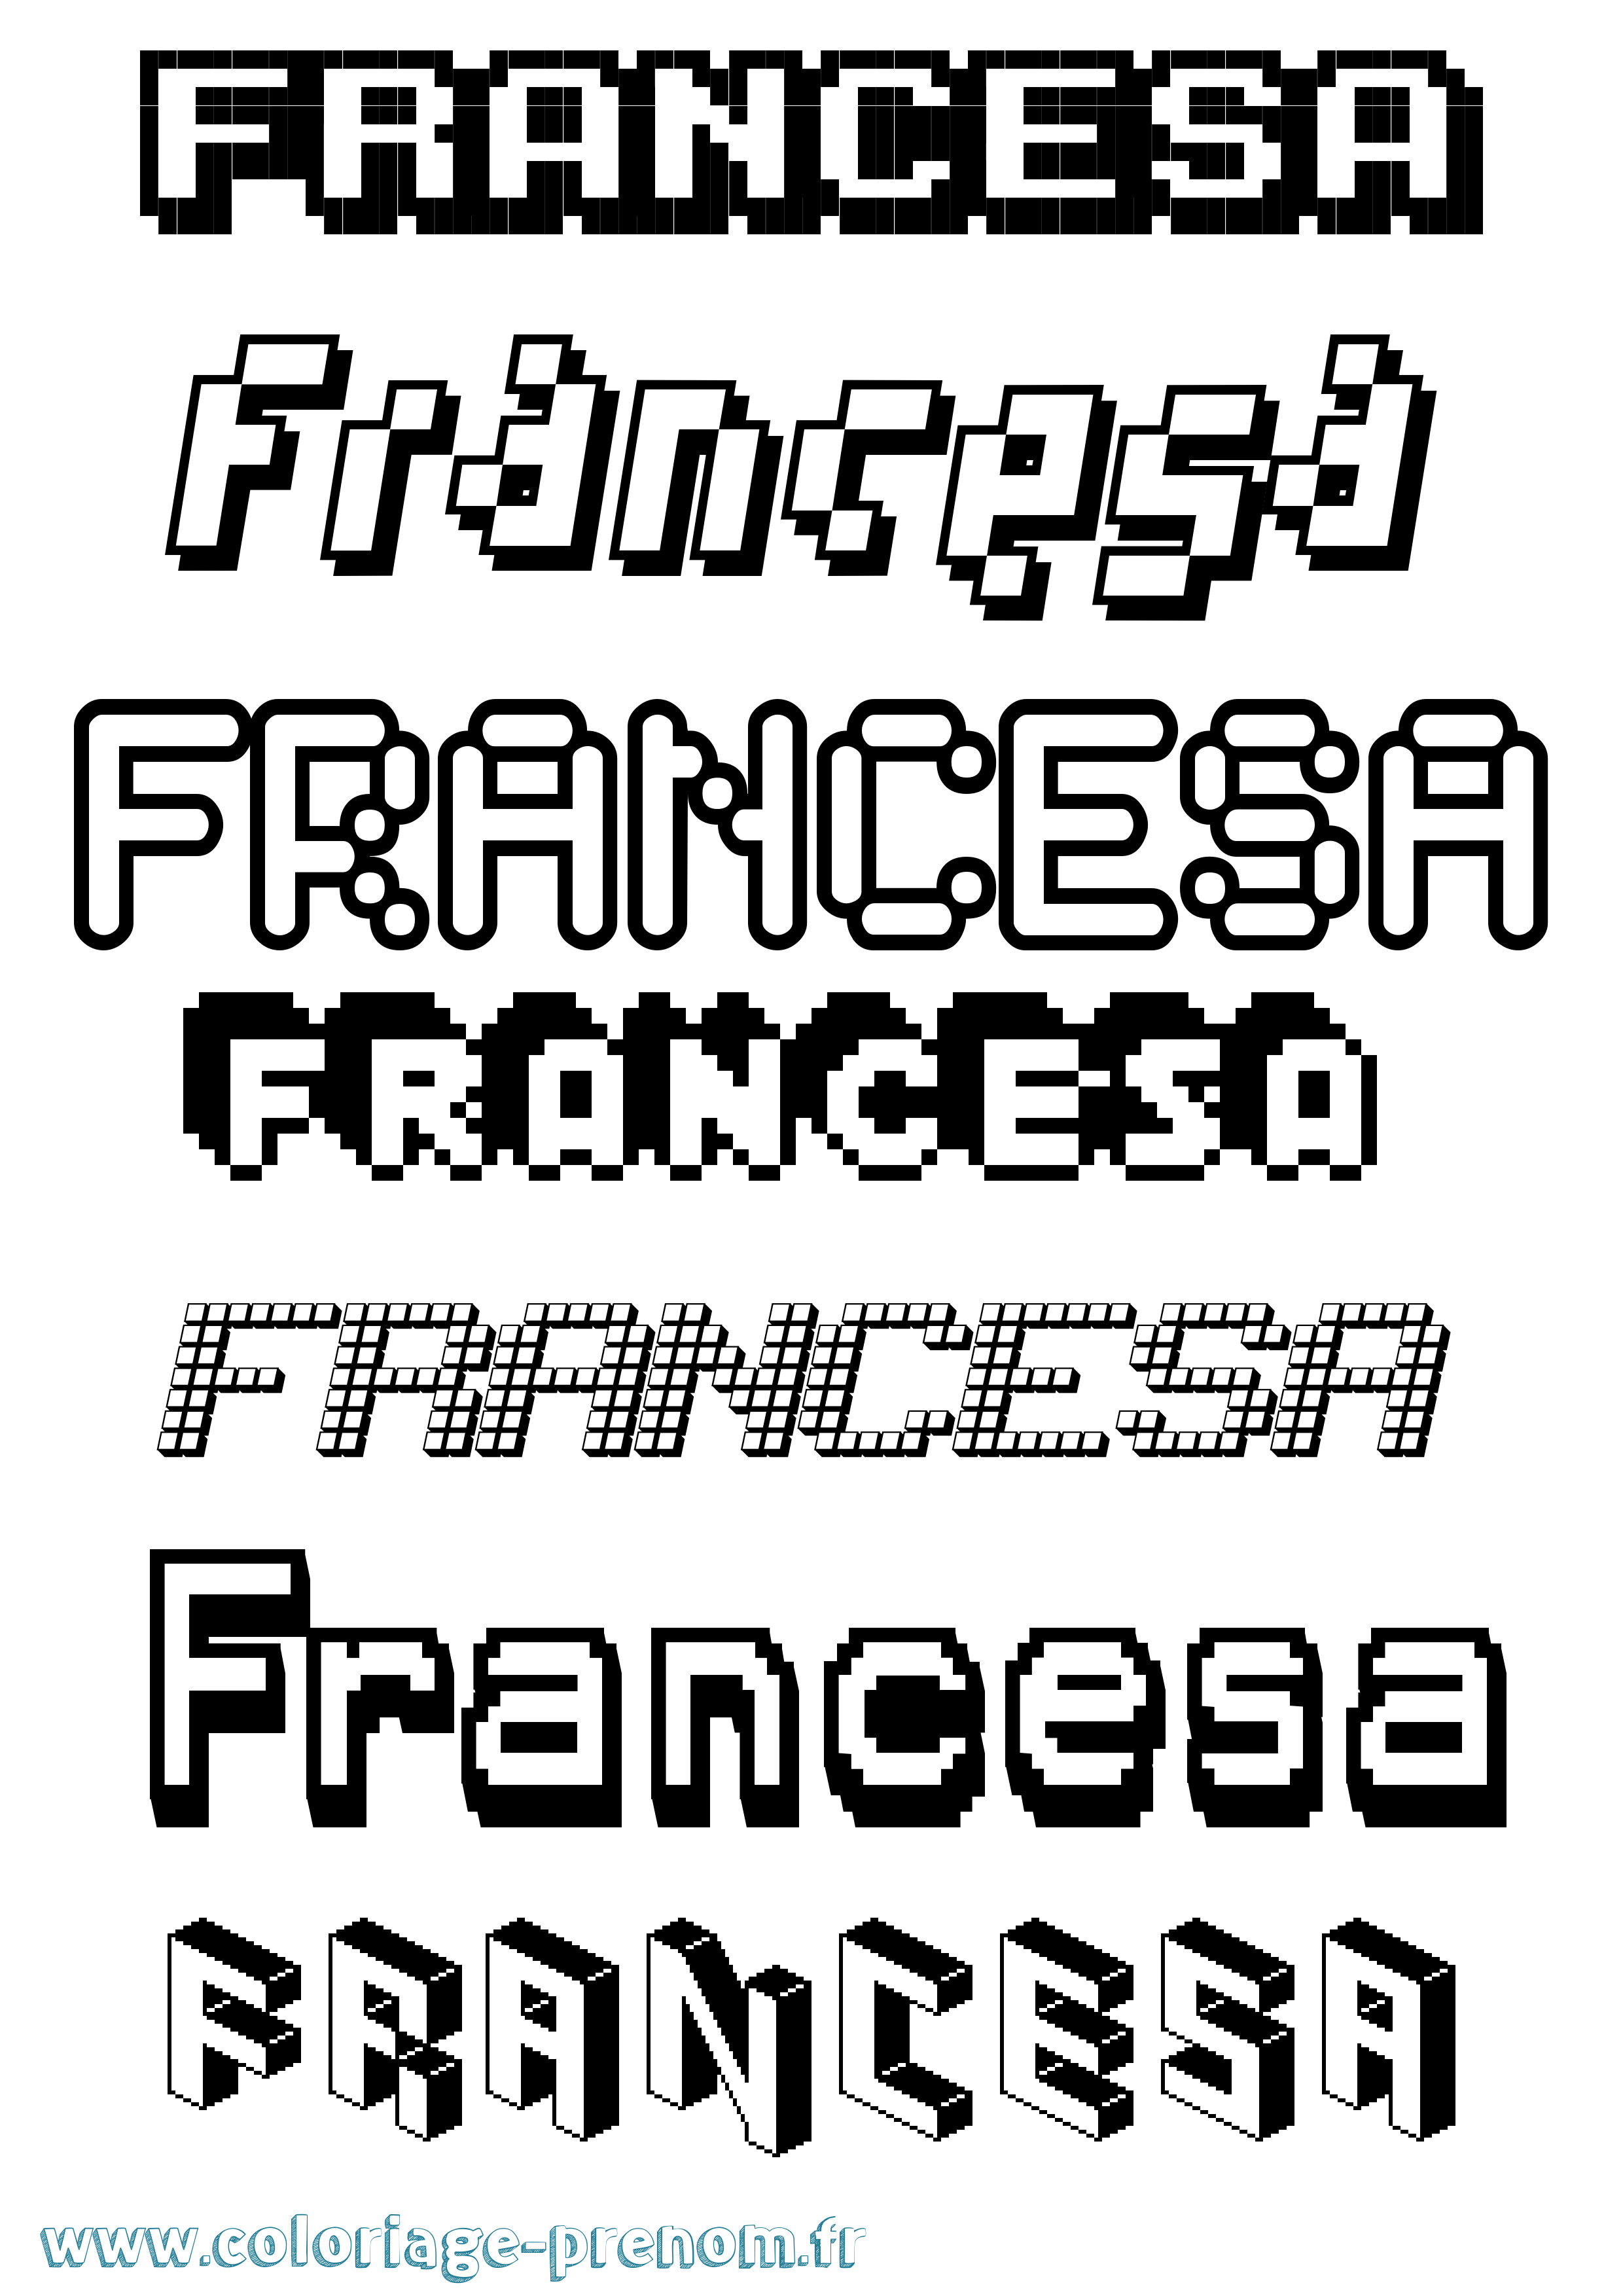 Coloriage prénom Francesa Pixel